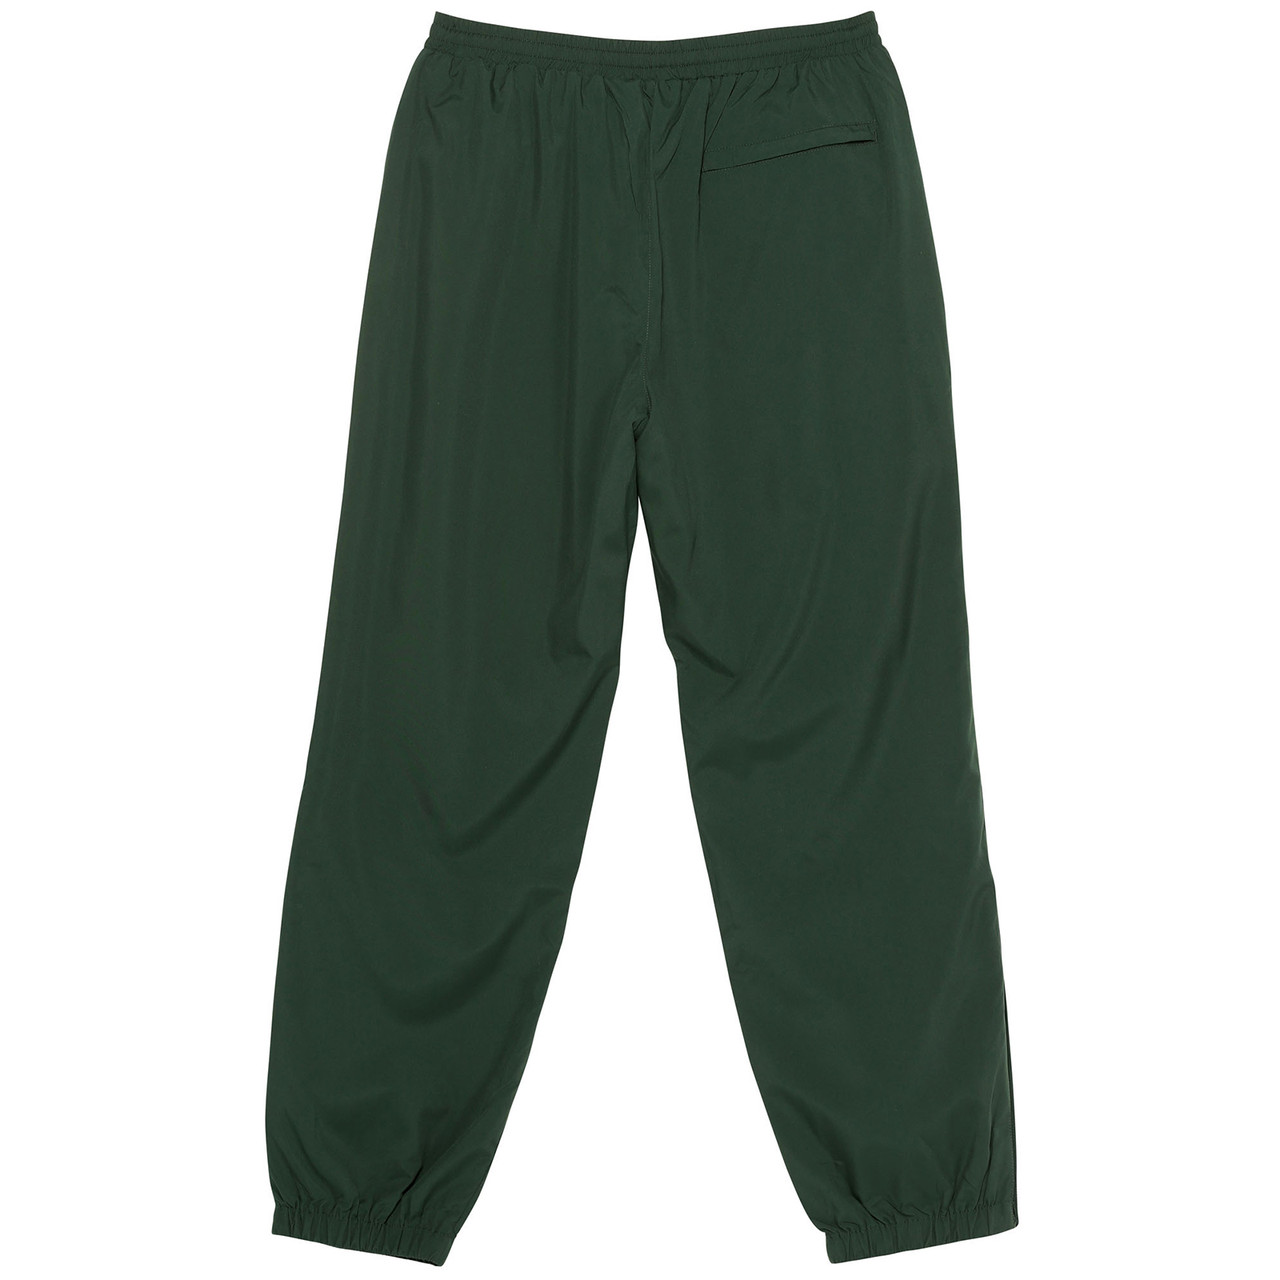 Unisex Polyester Warm Up Track Pants | Shop Blank Sports Wear Online